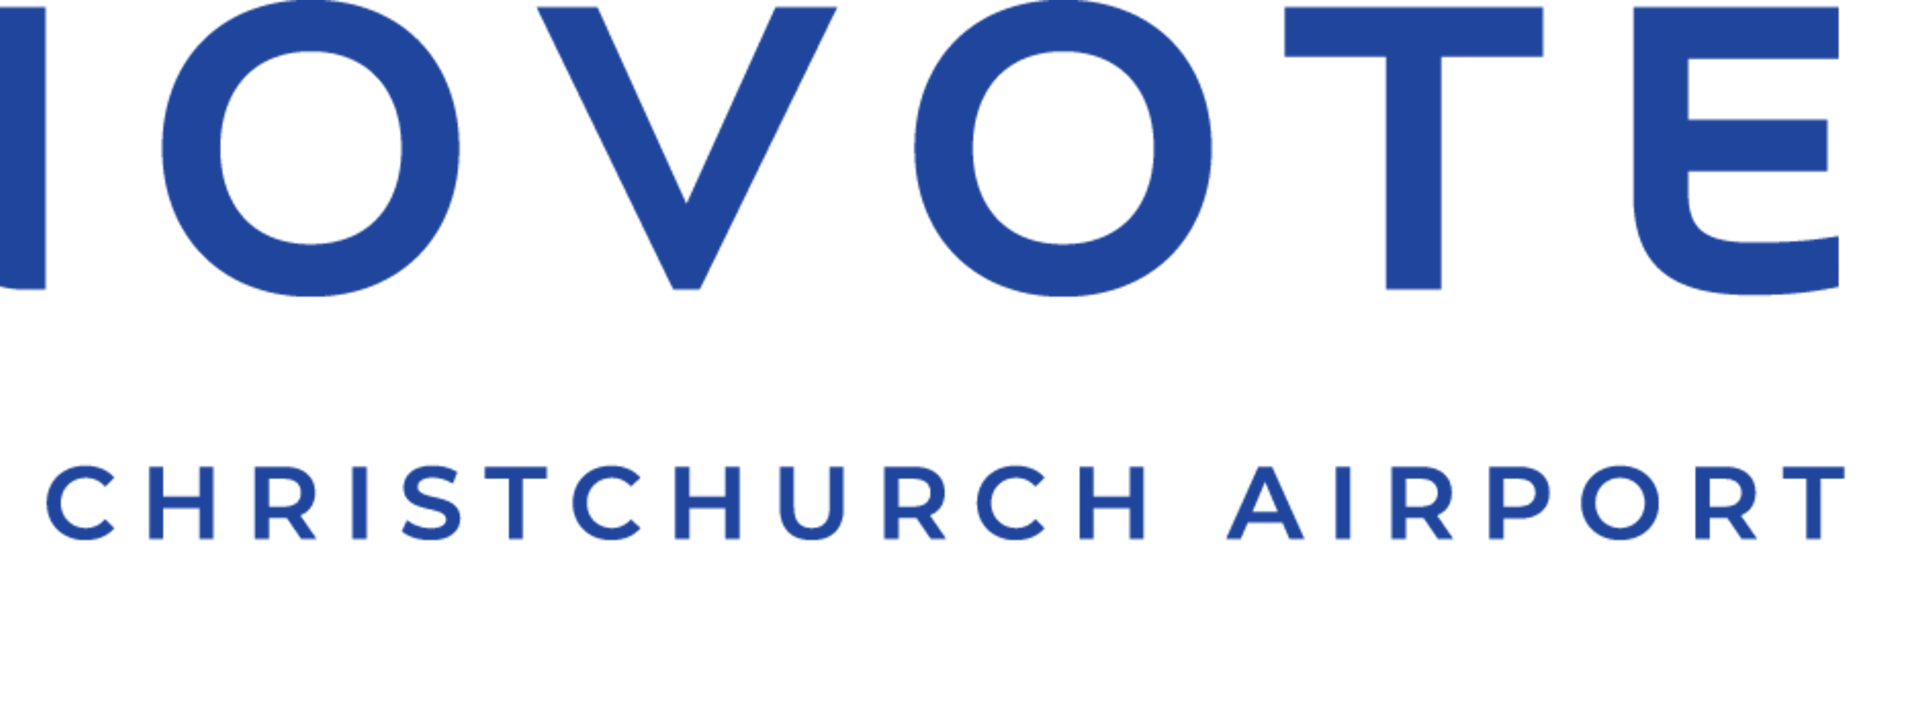 Novotel_Christchurch_Airport_logo_2020.png